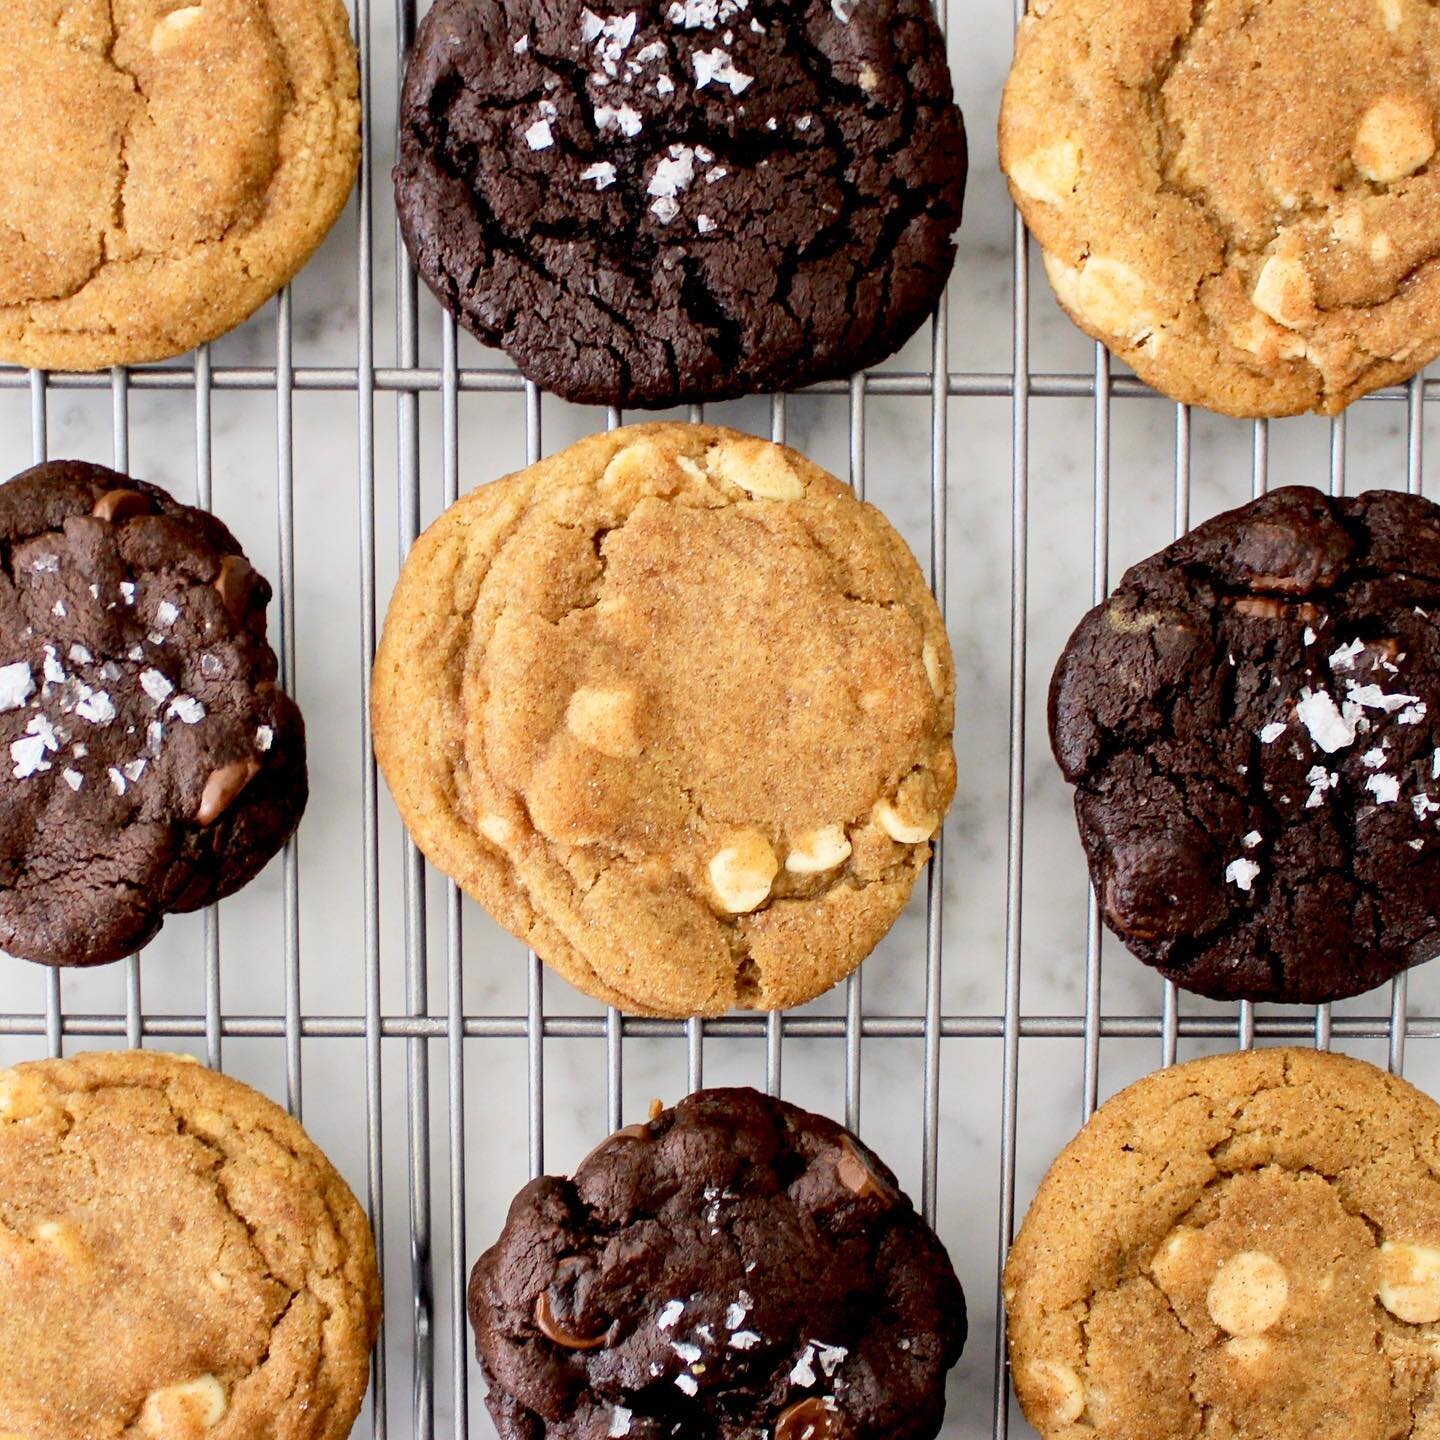 One for you, two for me. #sharesomecookies #localbusiness #cookiesofinstagram #seasaltcookies #whitechocolatechurro #doublechocolatecookies